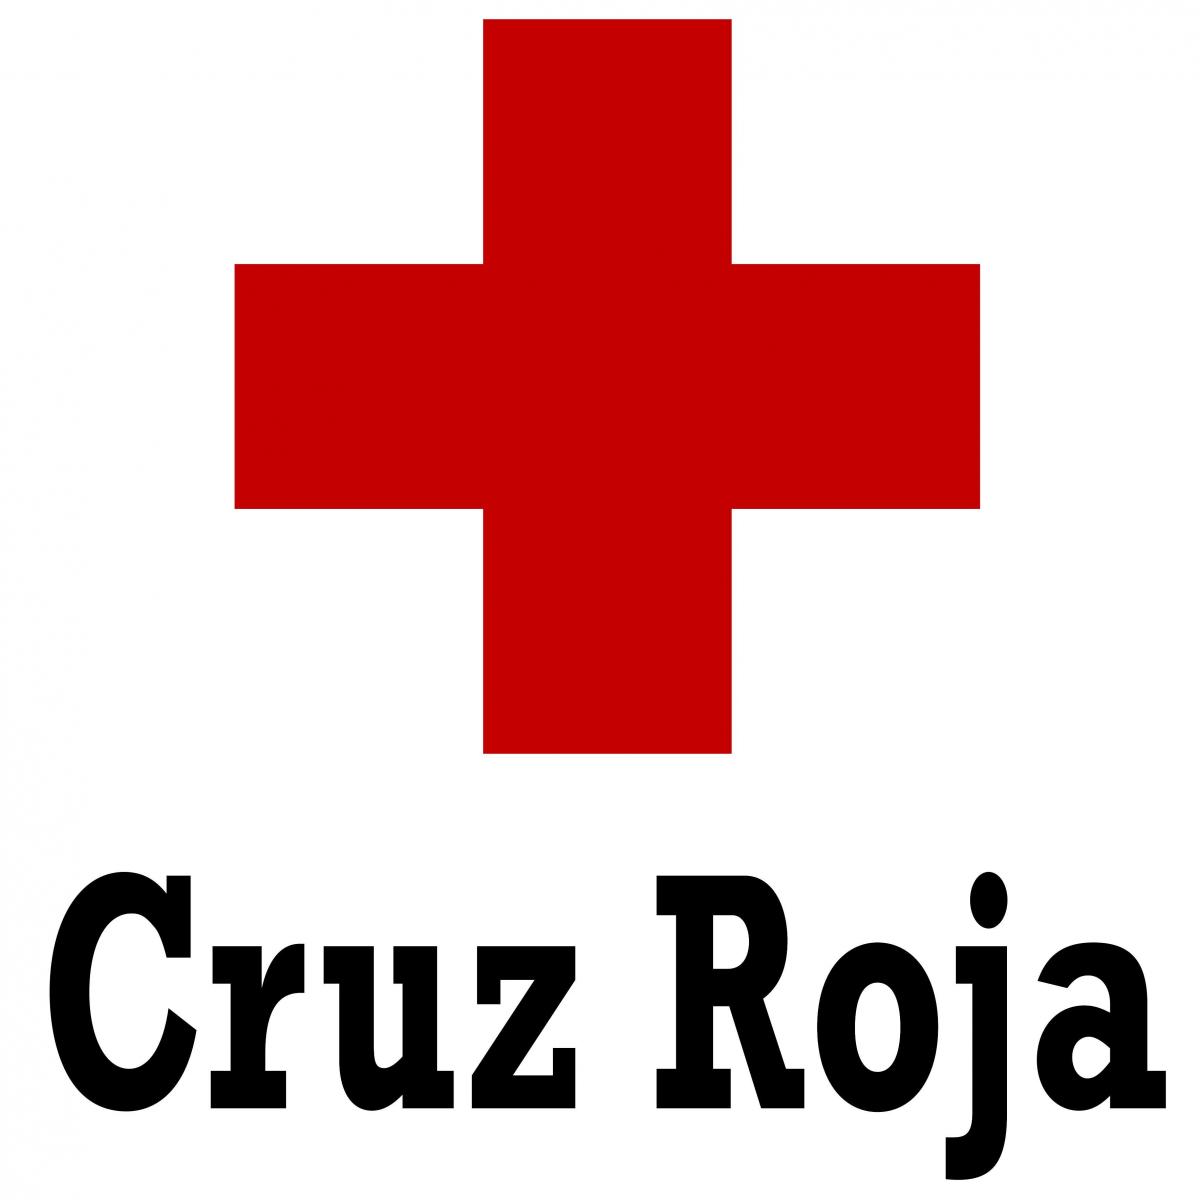 Reclamamos a Cruz Roja